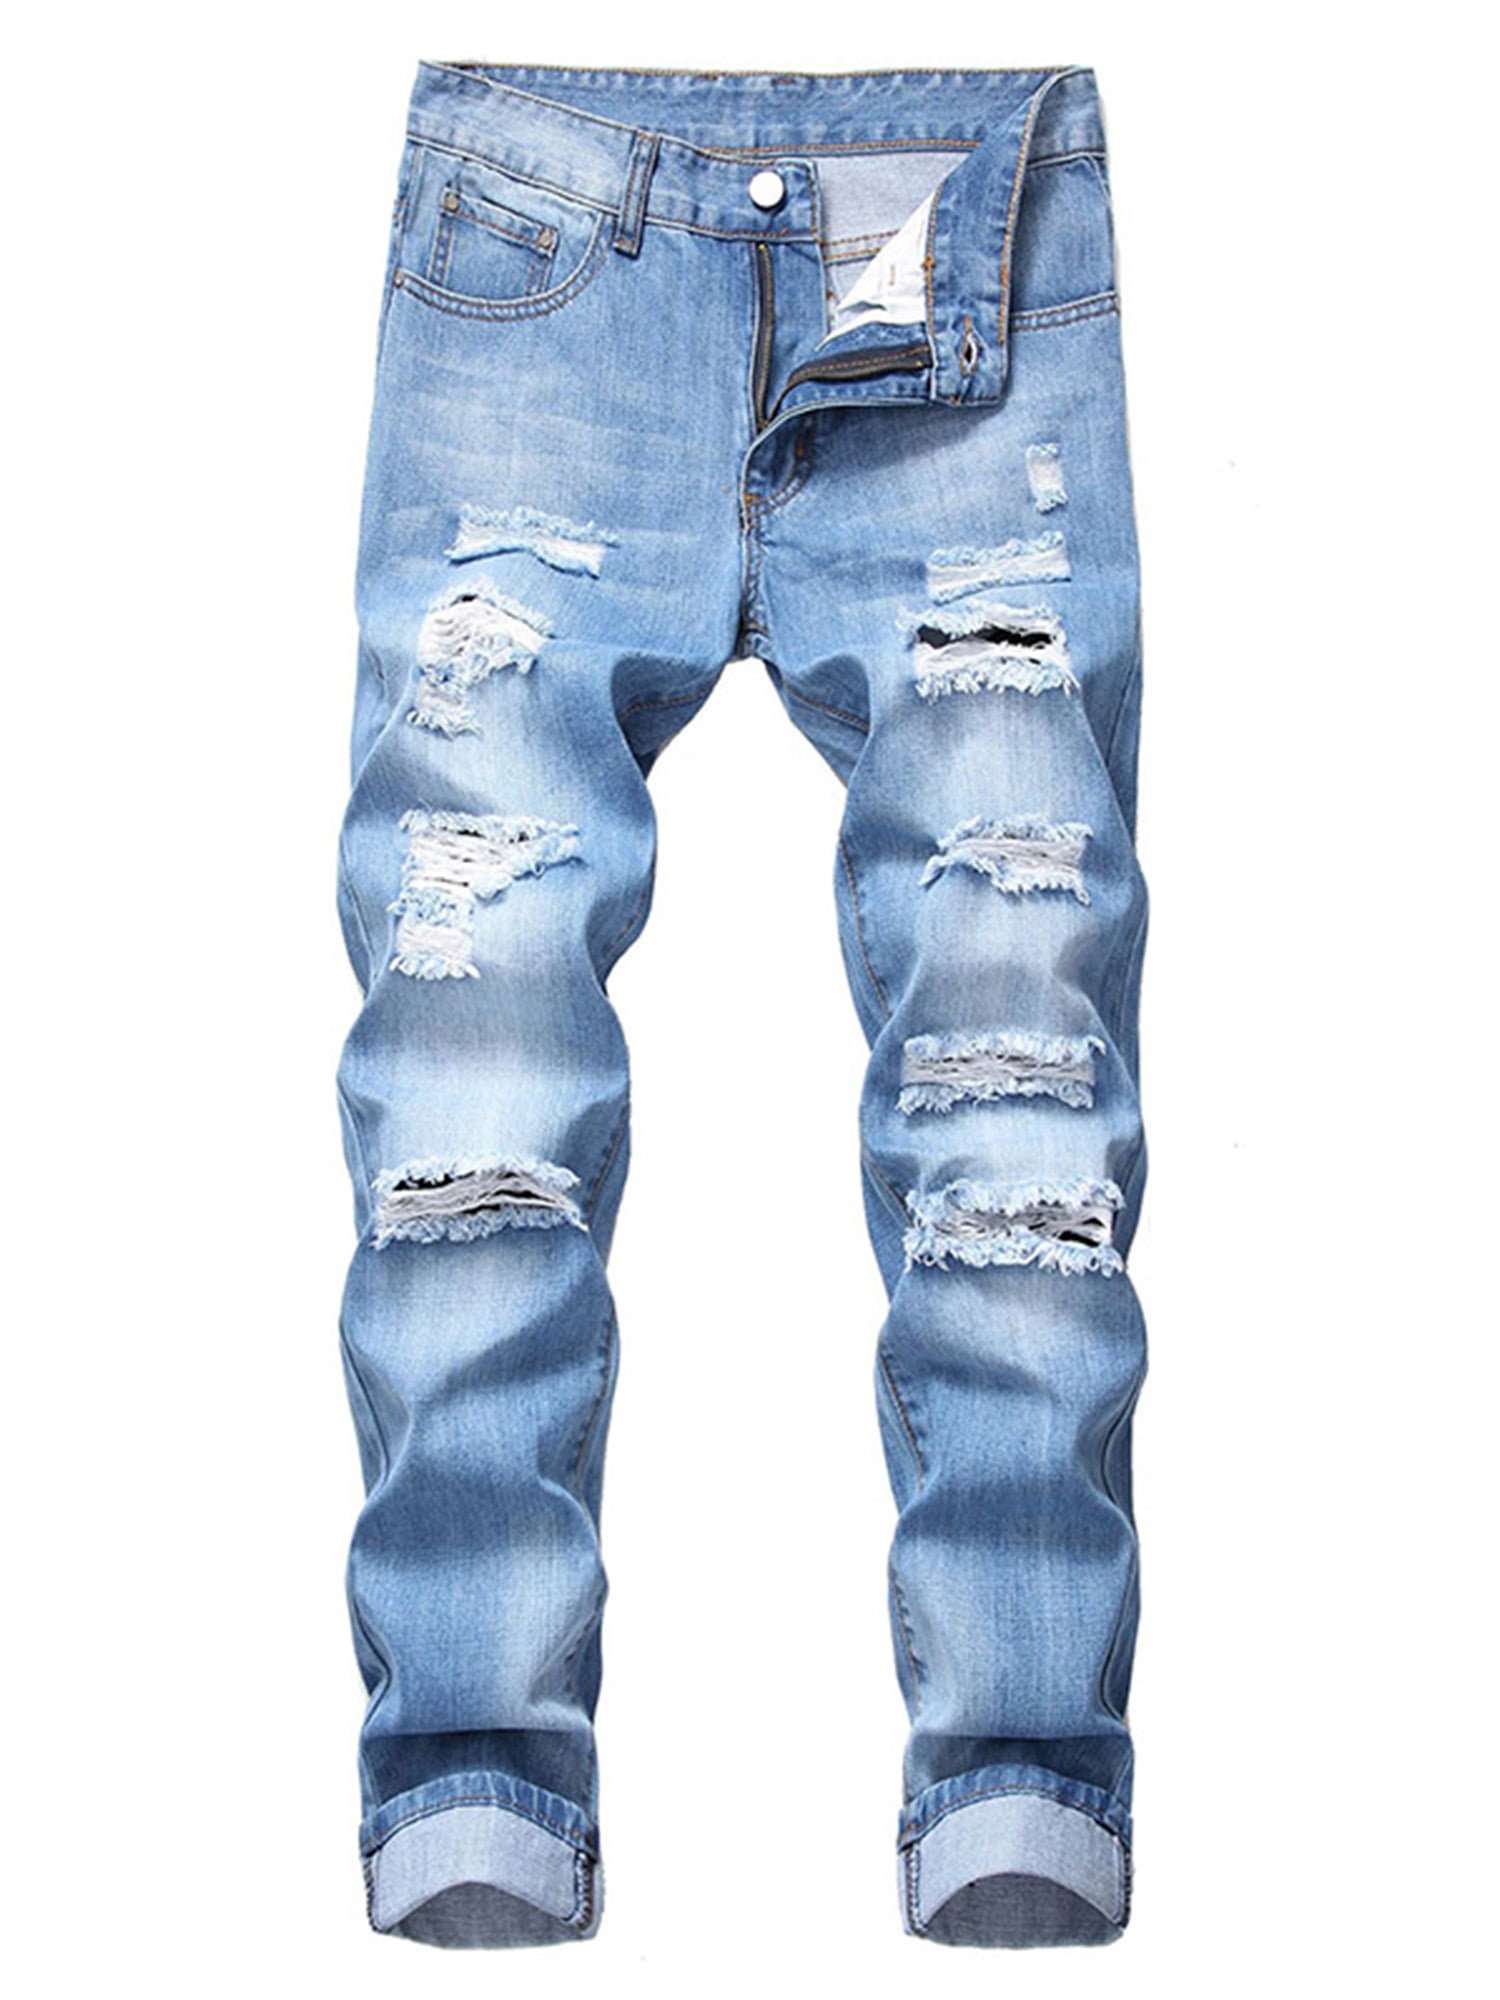 Men Denim Pants Ripped Bleach Blue Skinny Jeans Distressed Holes Frayed Slim 